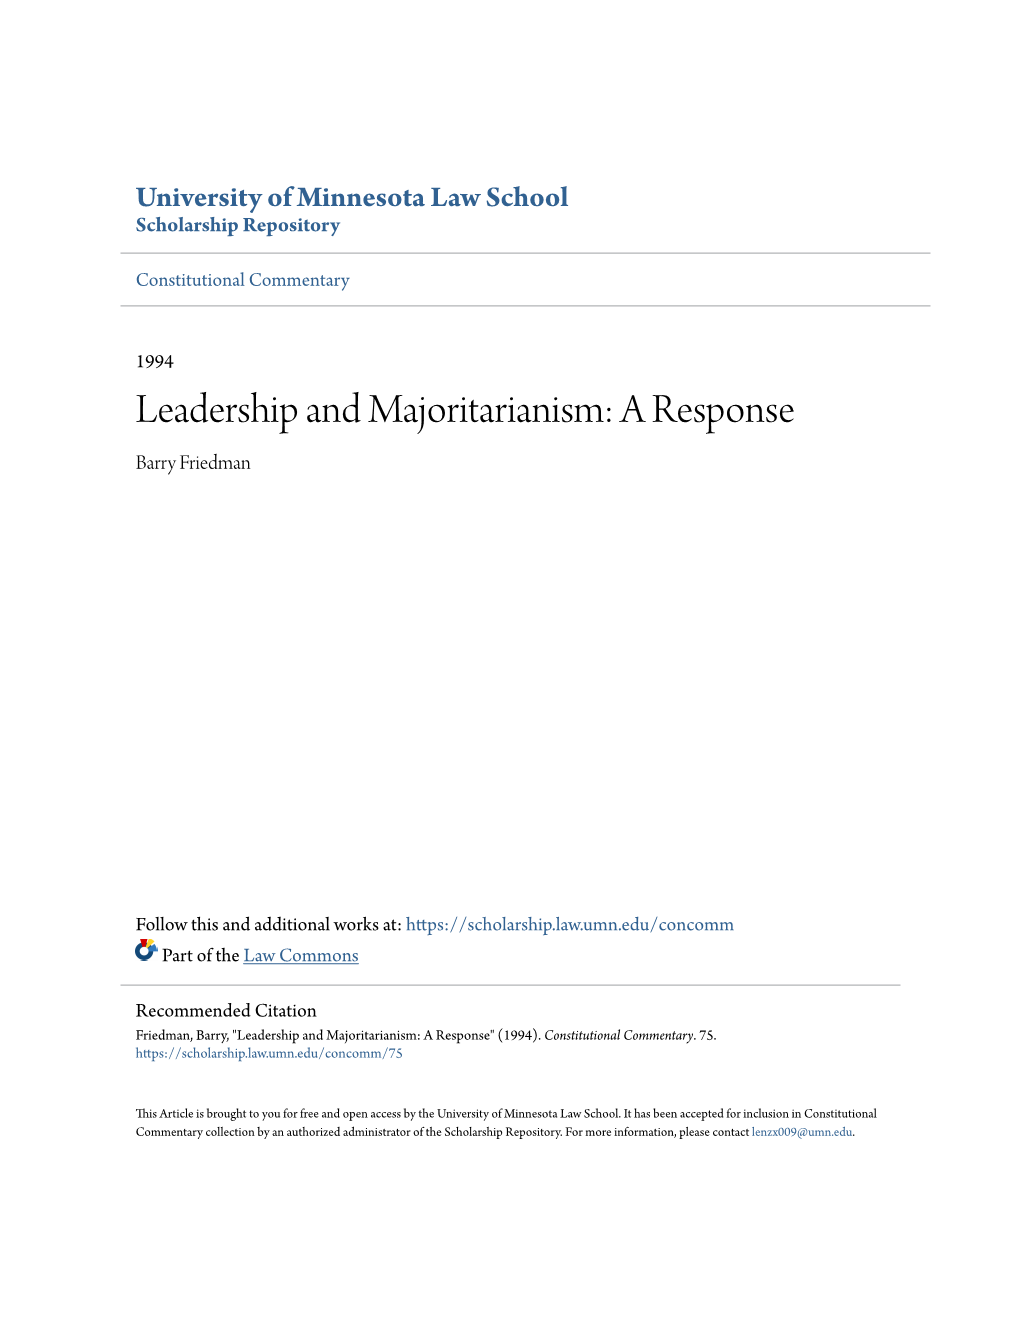 Leadership and Majoritarianism: a Response Barry Friedman